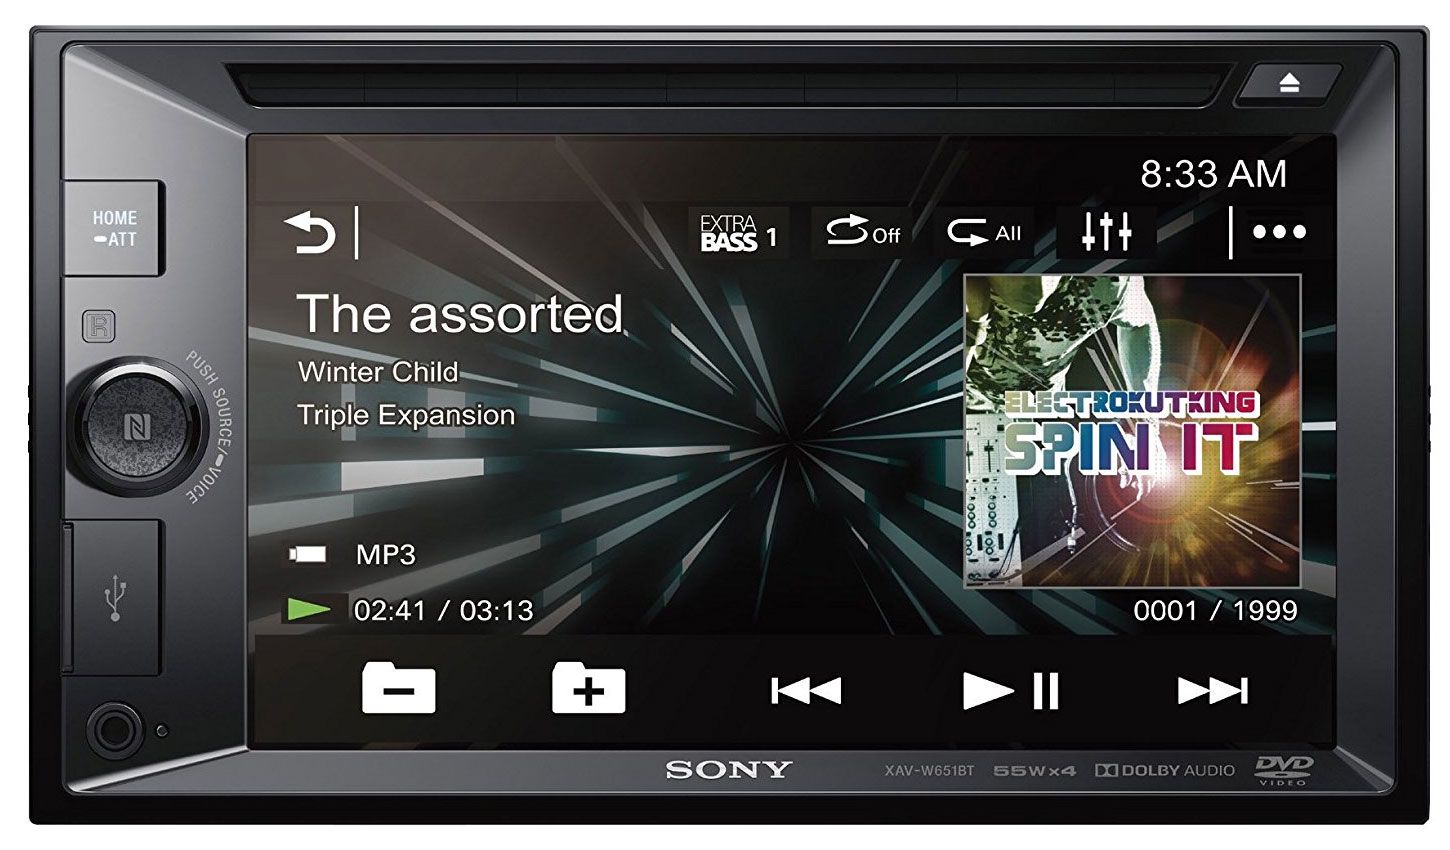 Sony XAV-W651BT - Doppel-DIN CD/DVD/MP3-Autoradio mit Touchscreen / Bluetooth / USB / iPod / AUX-IN